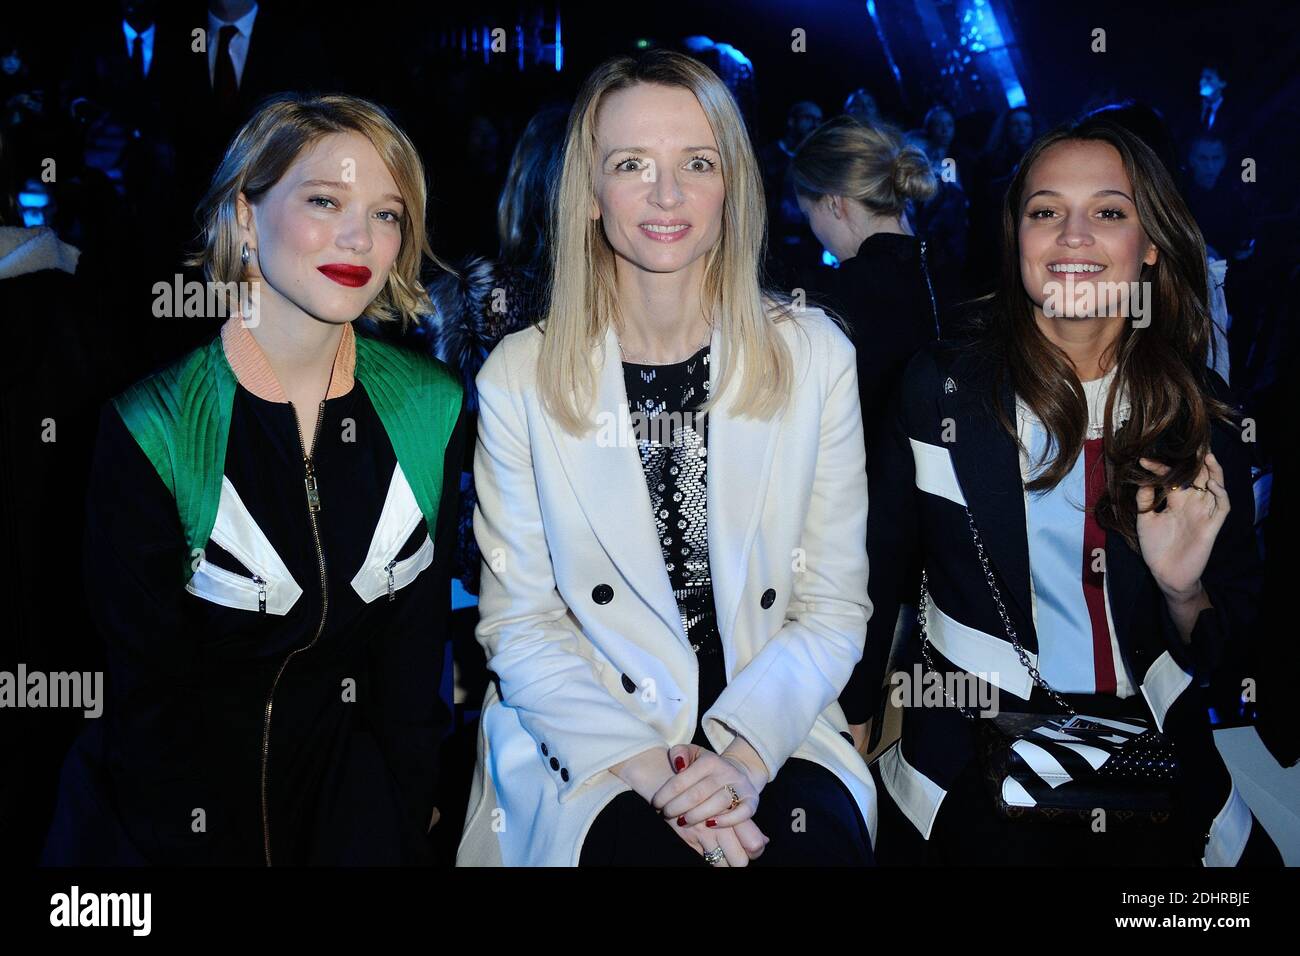 Lea Seydoux, Delphine Arnault and Alicia Vikander attending the